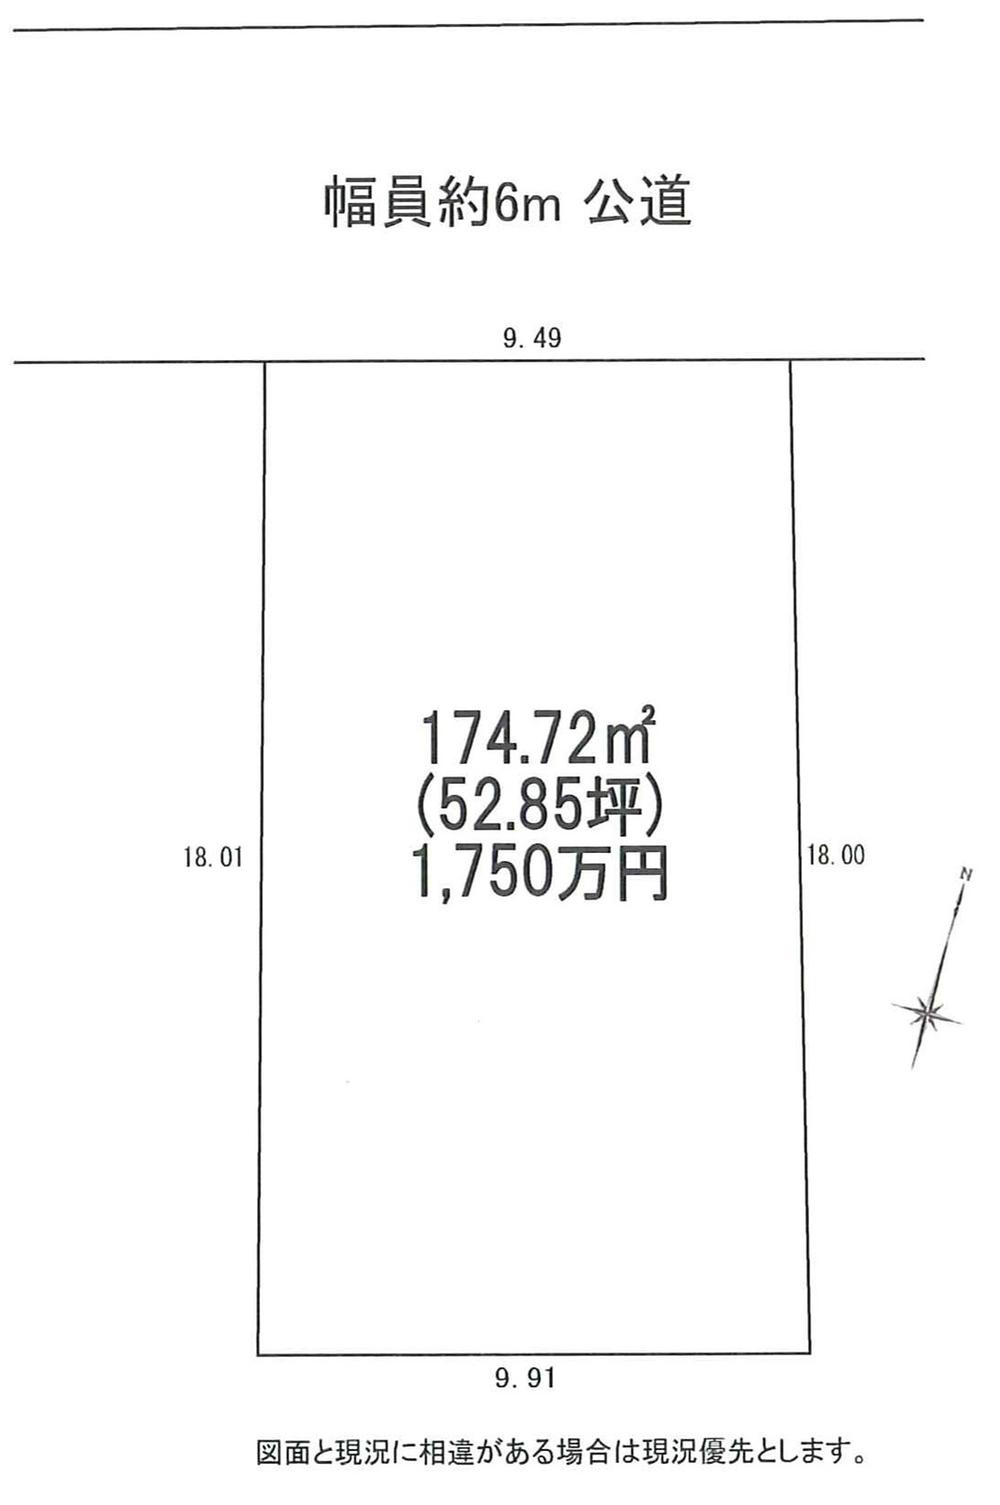 Compartment figure. Land price 17.5 million yen, Land area 174.72 sq m